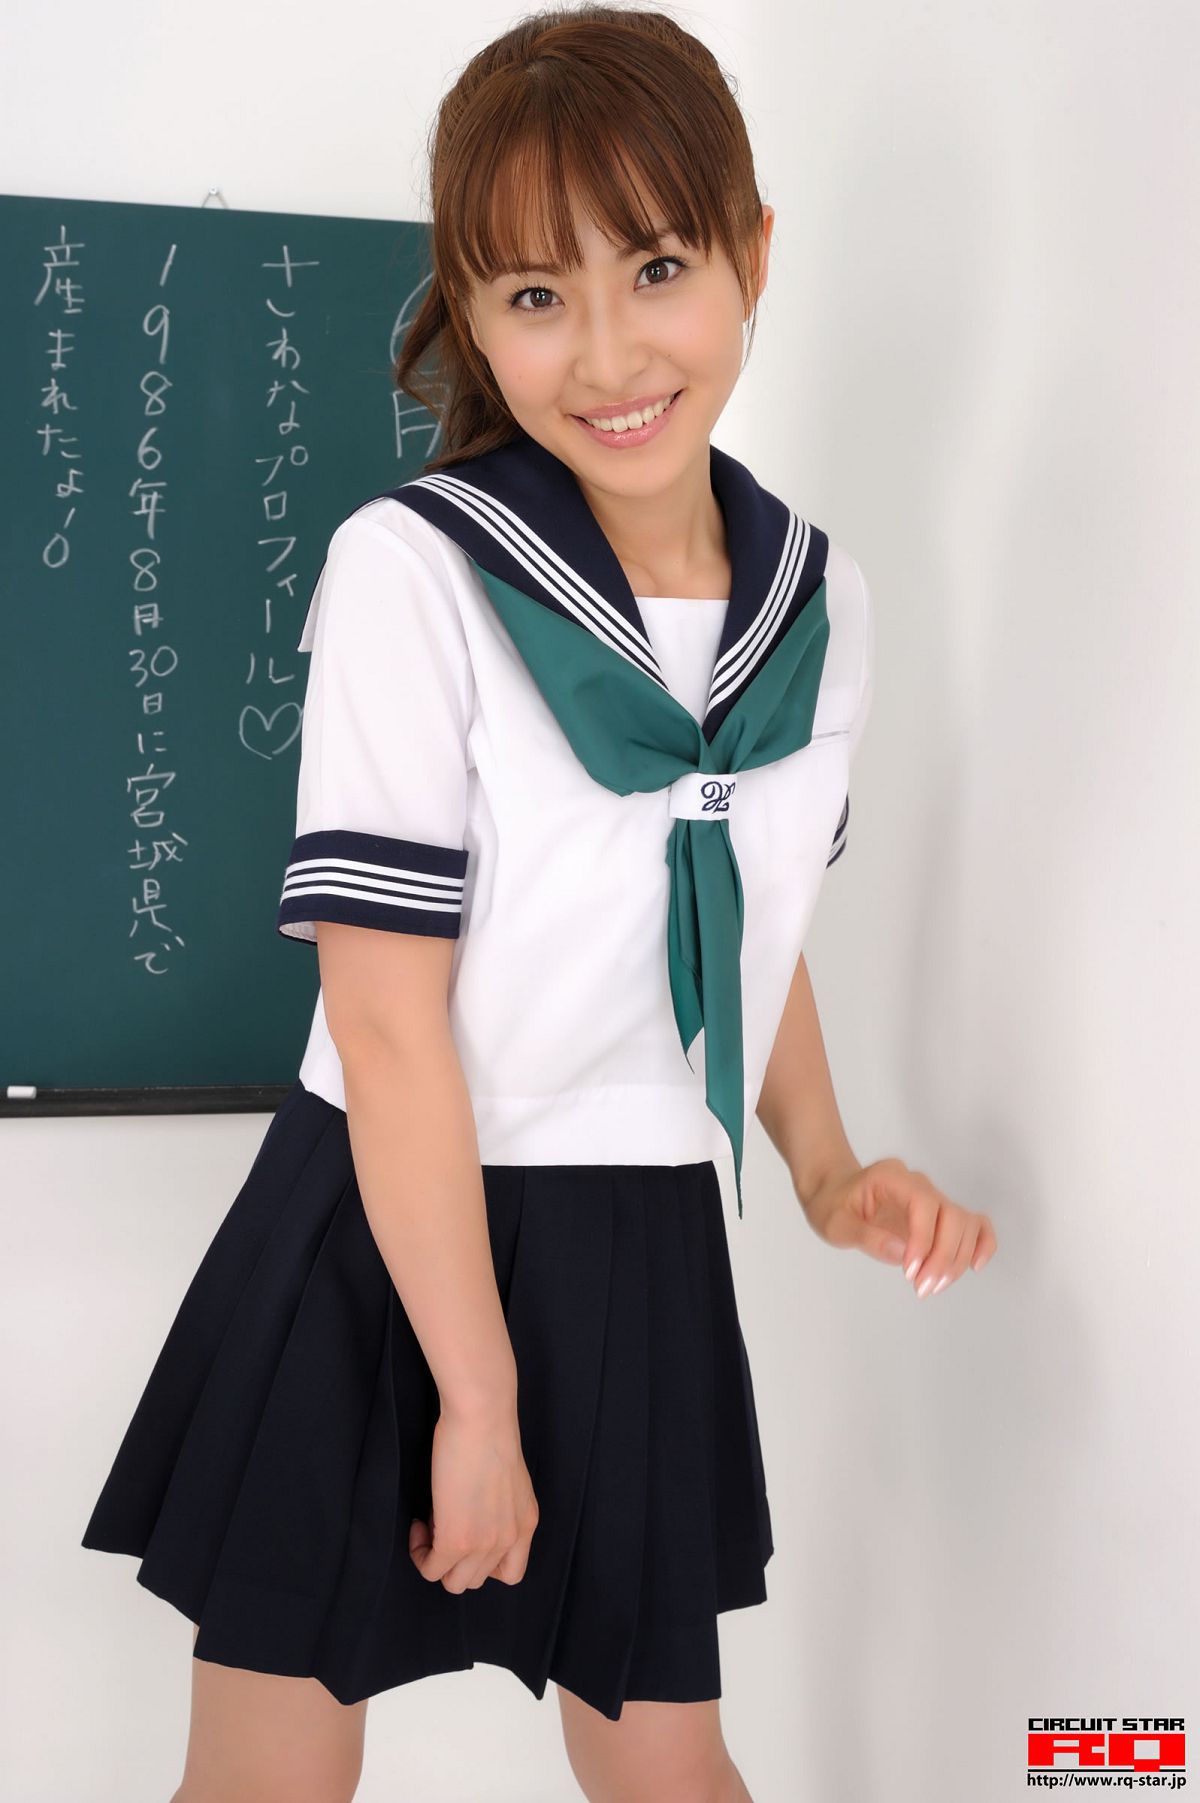 [RQ-STAR] 2016.02.17 NO.01159 Rena Sawai 澤井玲菜 School Girl [136P]